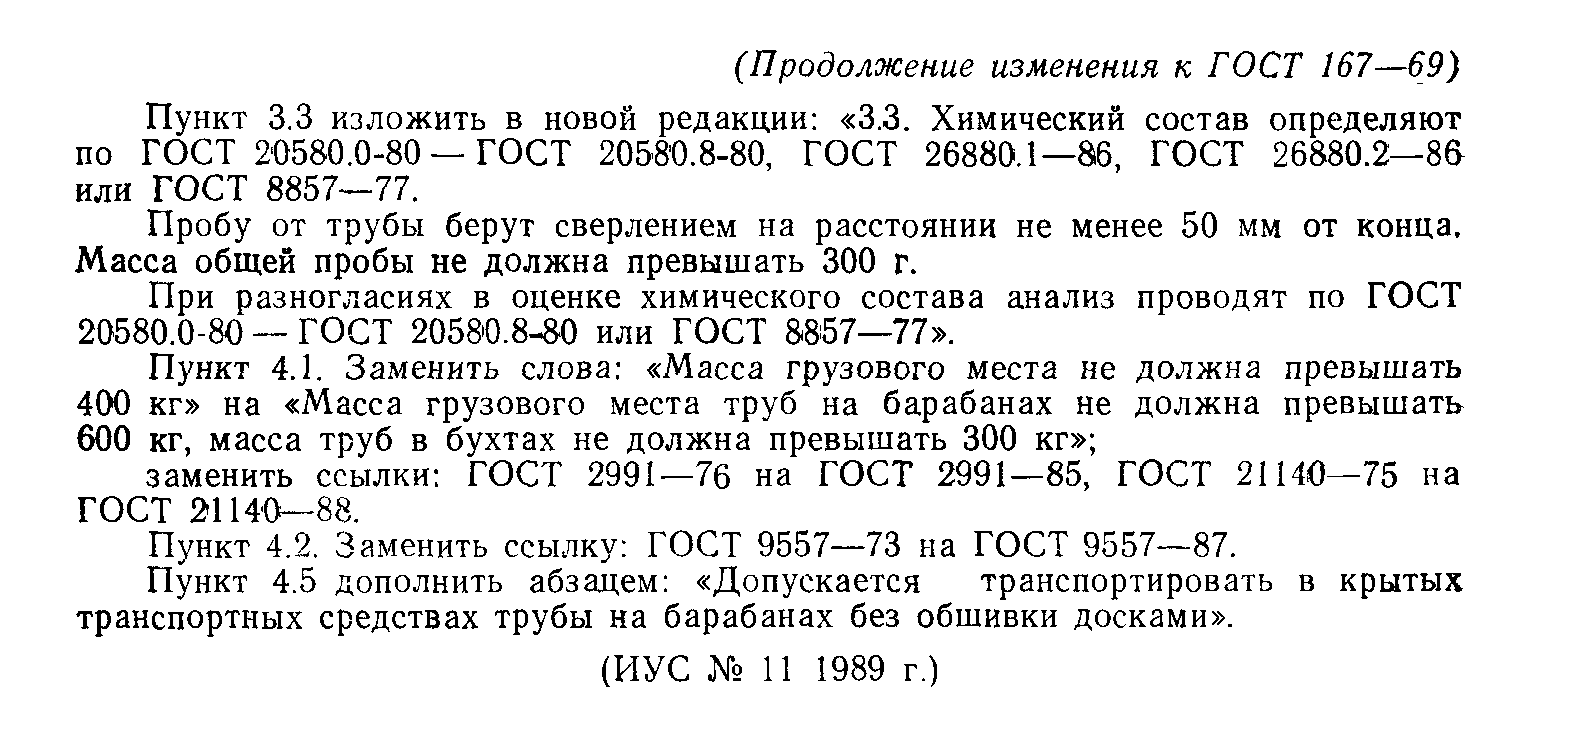 ГОСТ 167-69